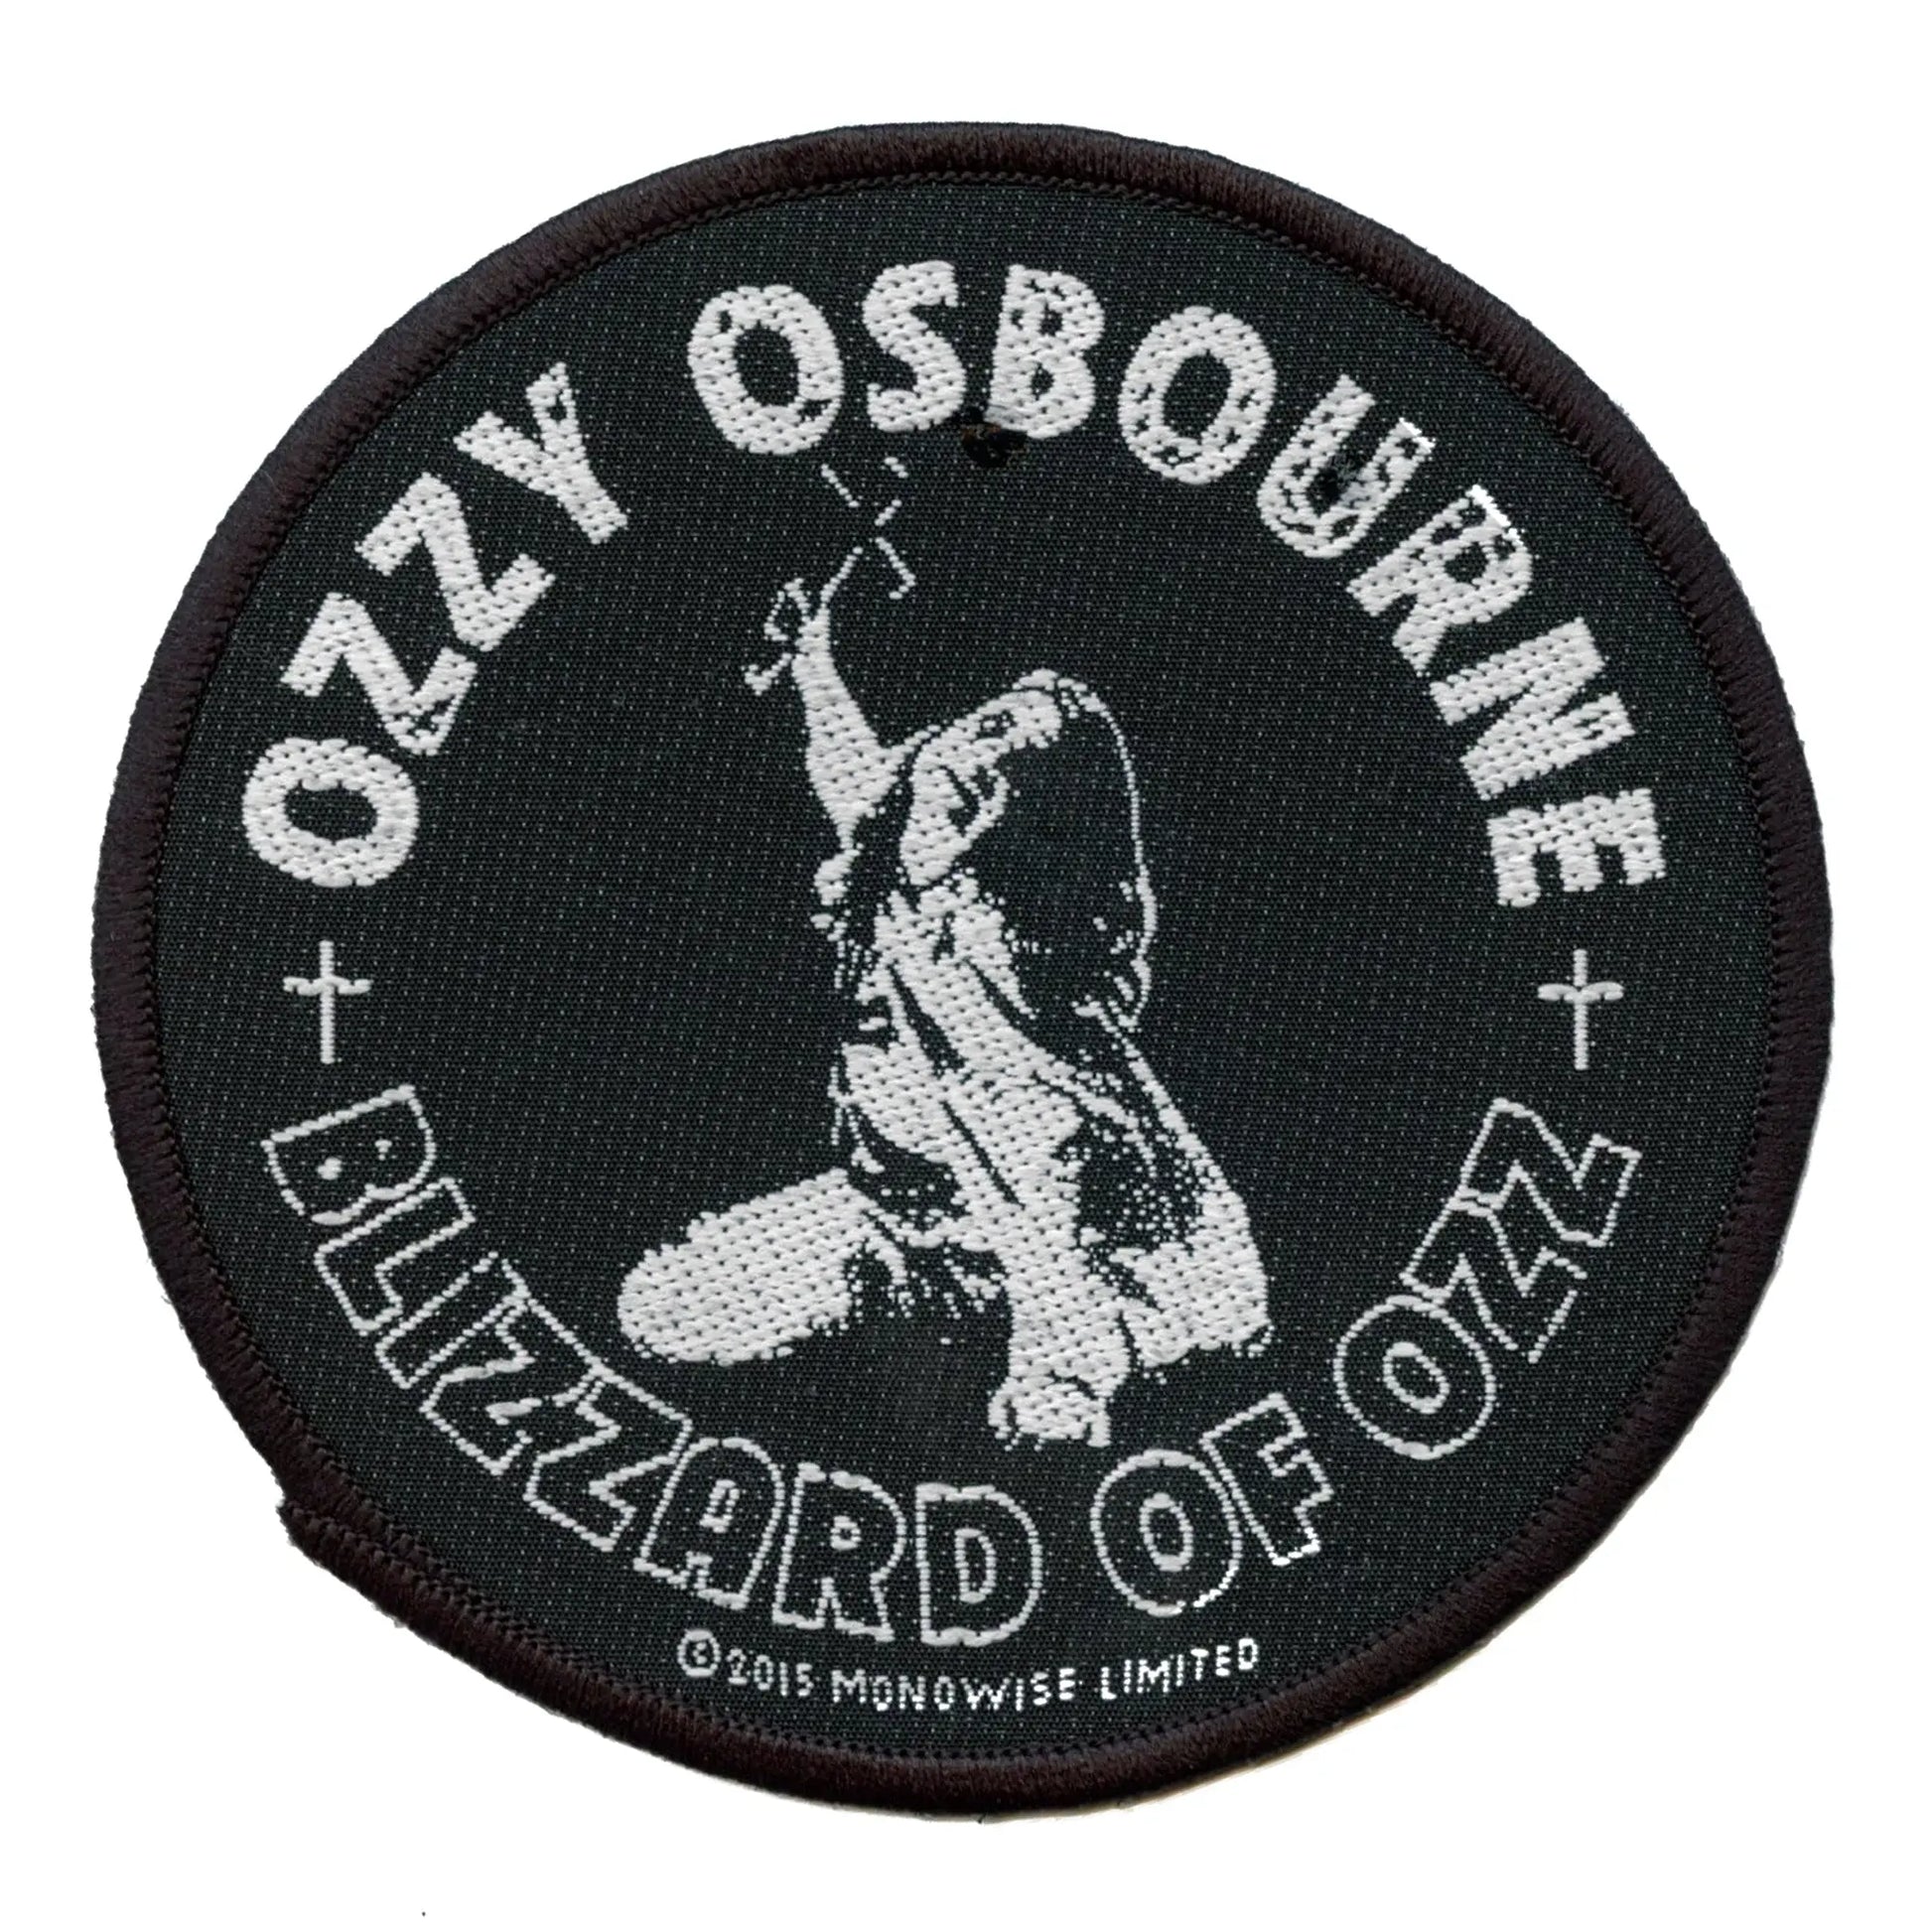 Ozzy Osbourne Blizzard Of Ozz Patch Legend Metal Classic Woven Iron On